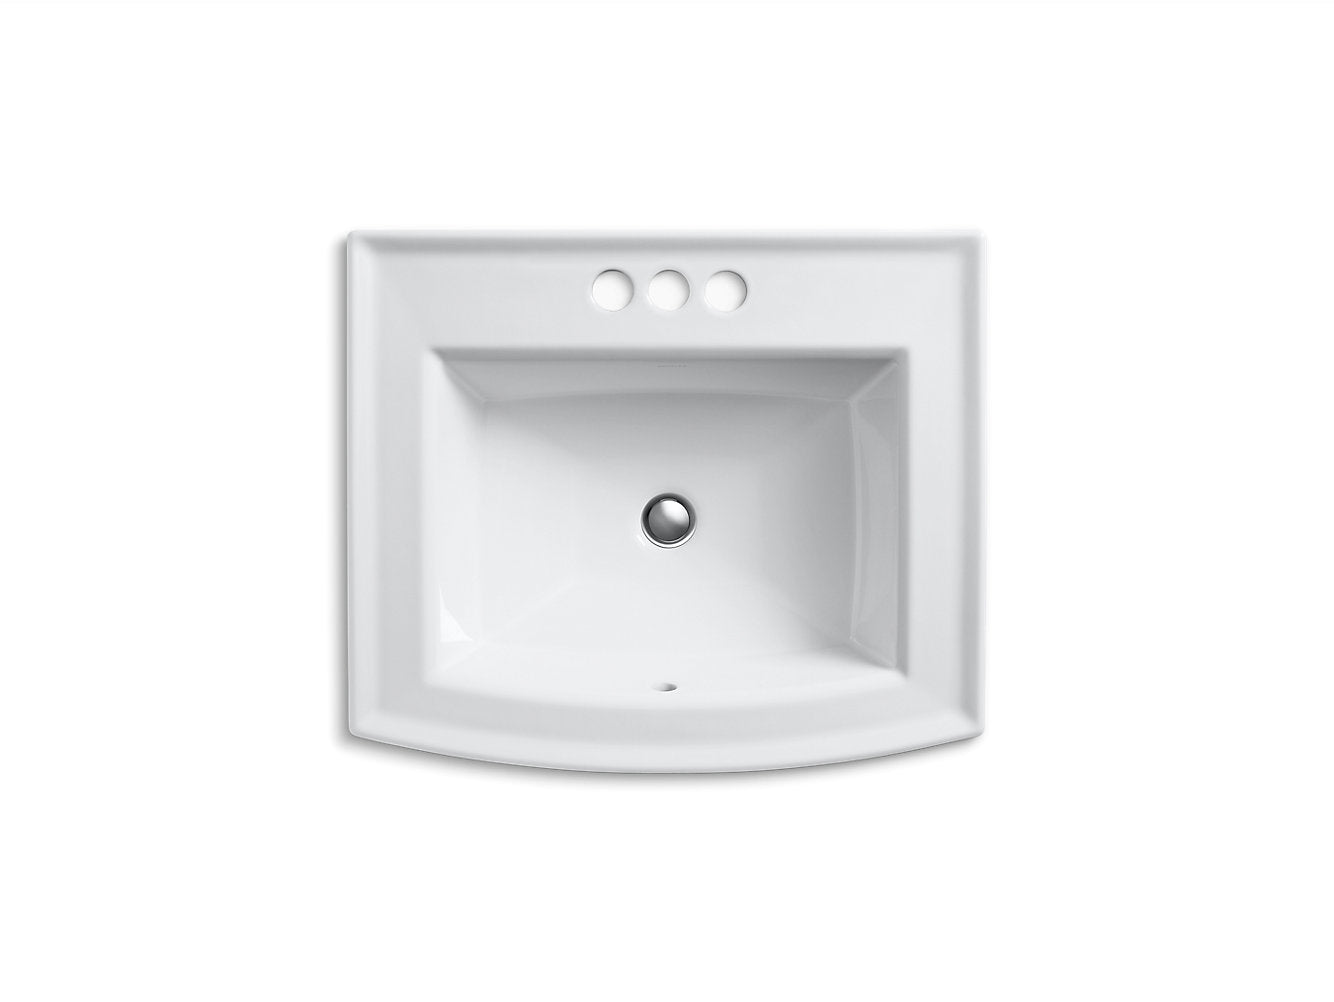 Kohler Archer 22-5/8" x 19-7/16" Drop-in Bathroom Sink With 4" Centerset Faucet Holes